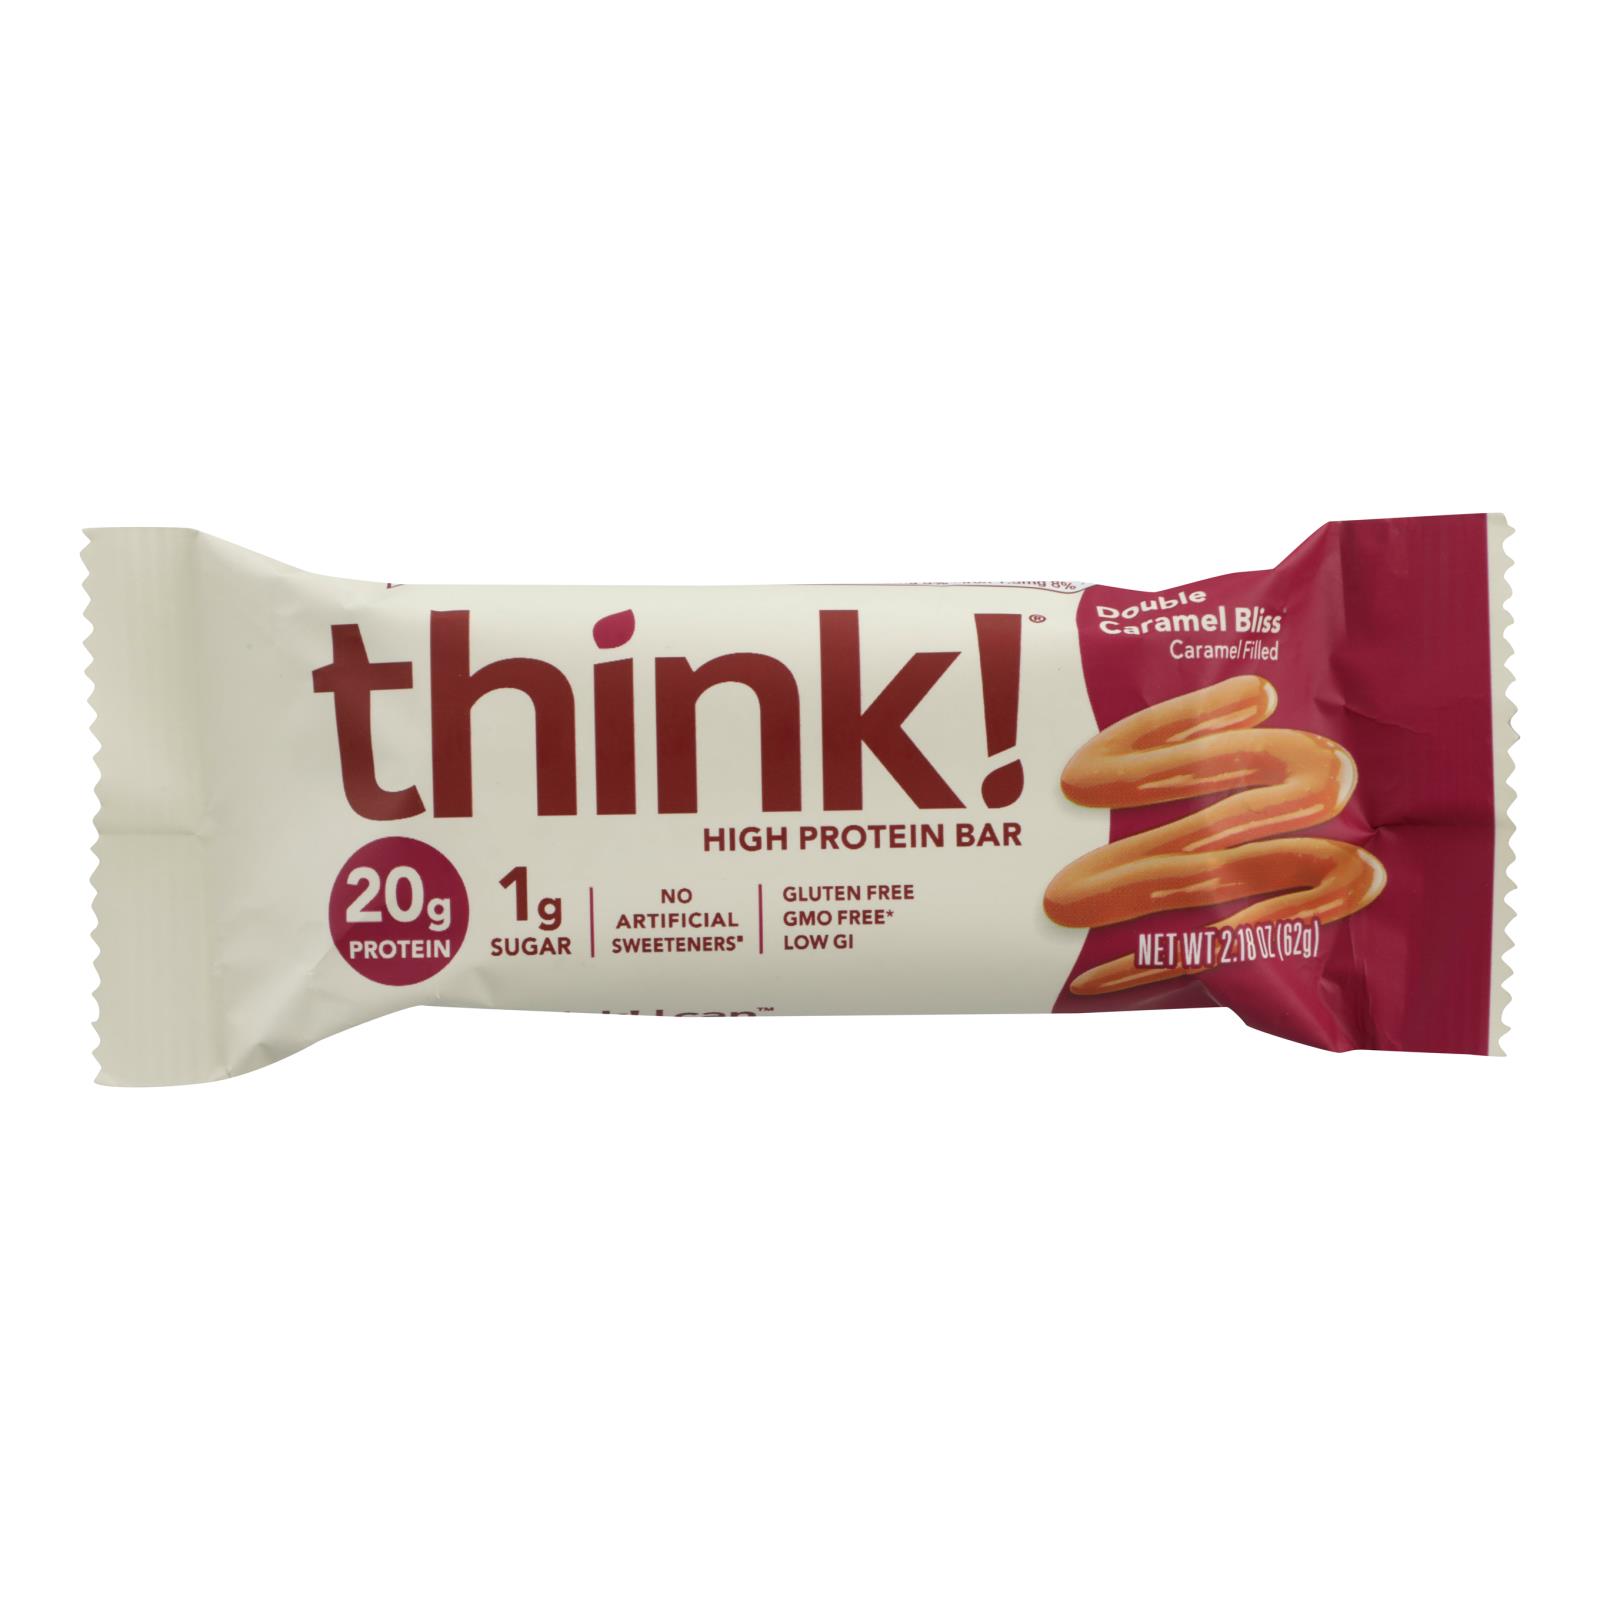 Think! Thin - Bar H-prot Double Caramel Bliss - 10개 묶음상품 - 2.1 OZ